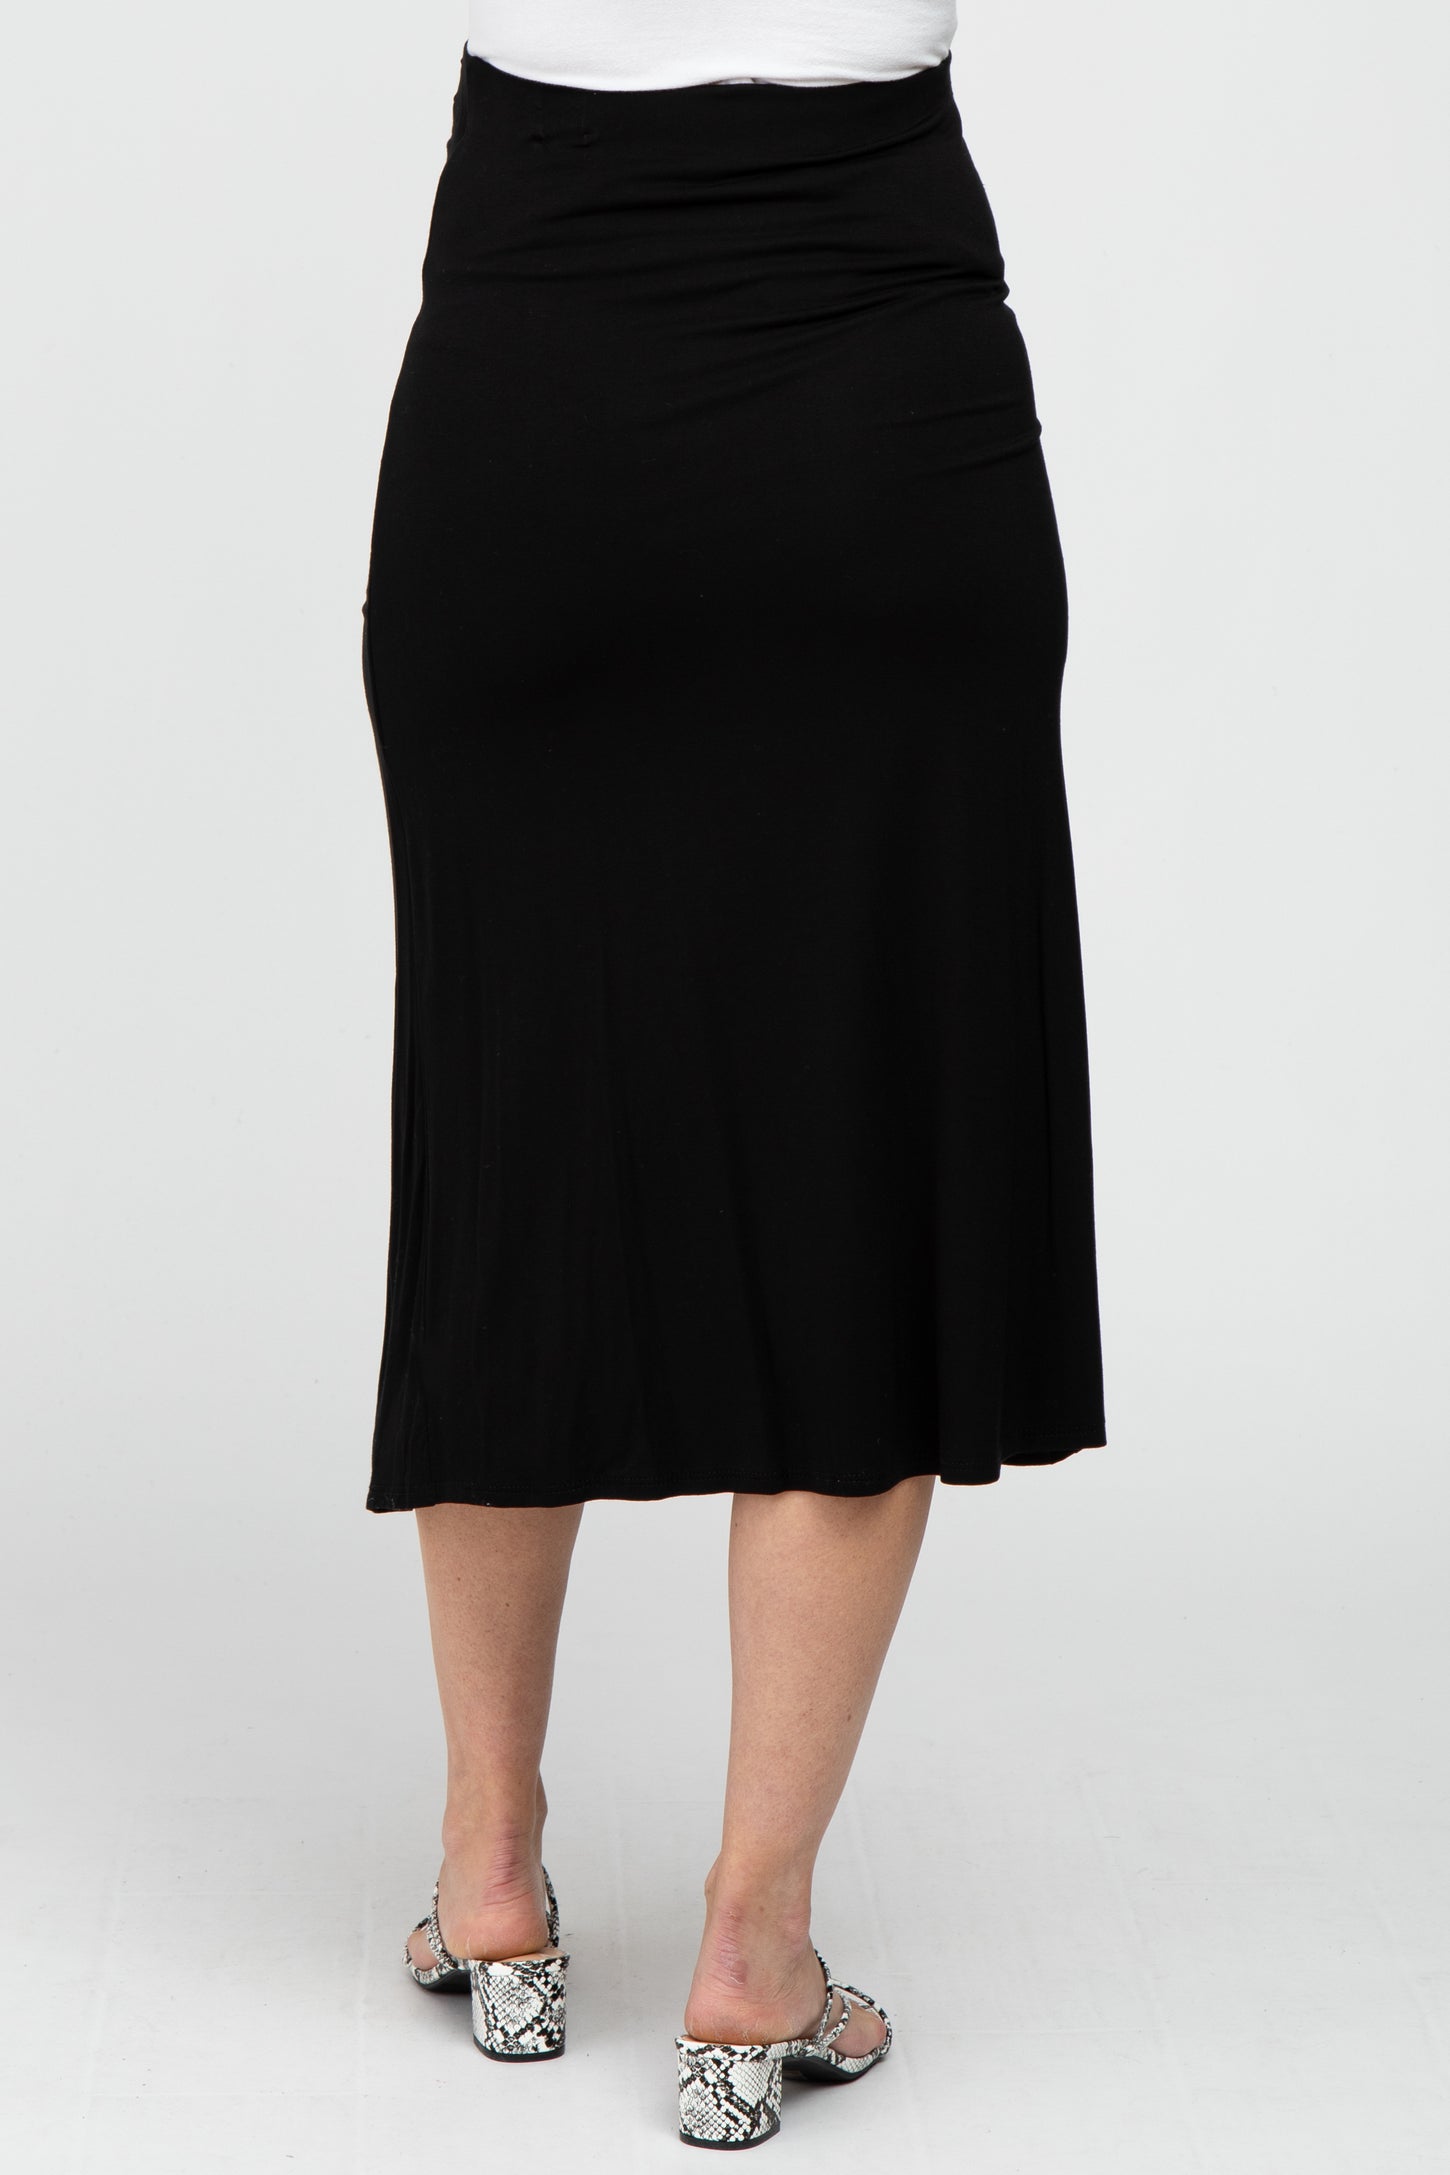 Black Ruched Maternity Midi Skirt